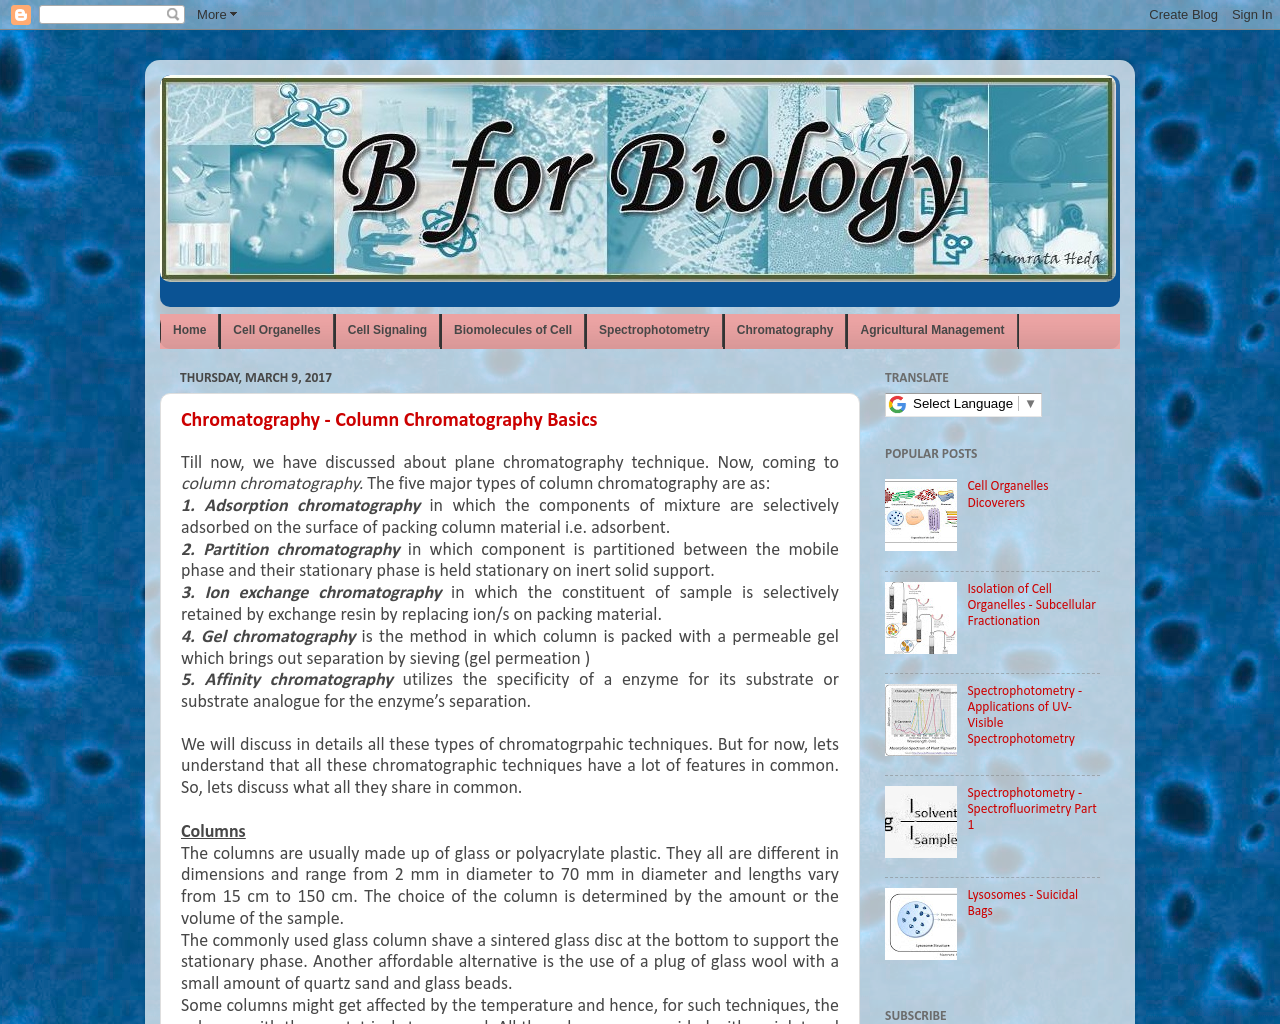 B for Biology